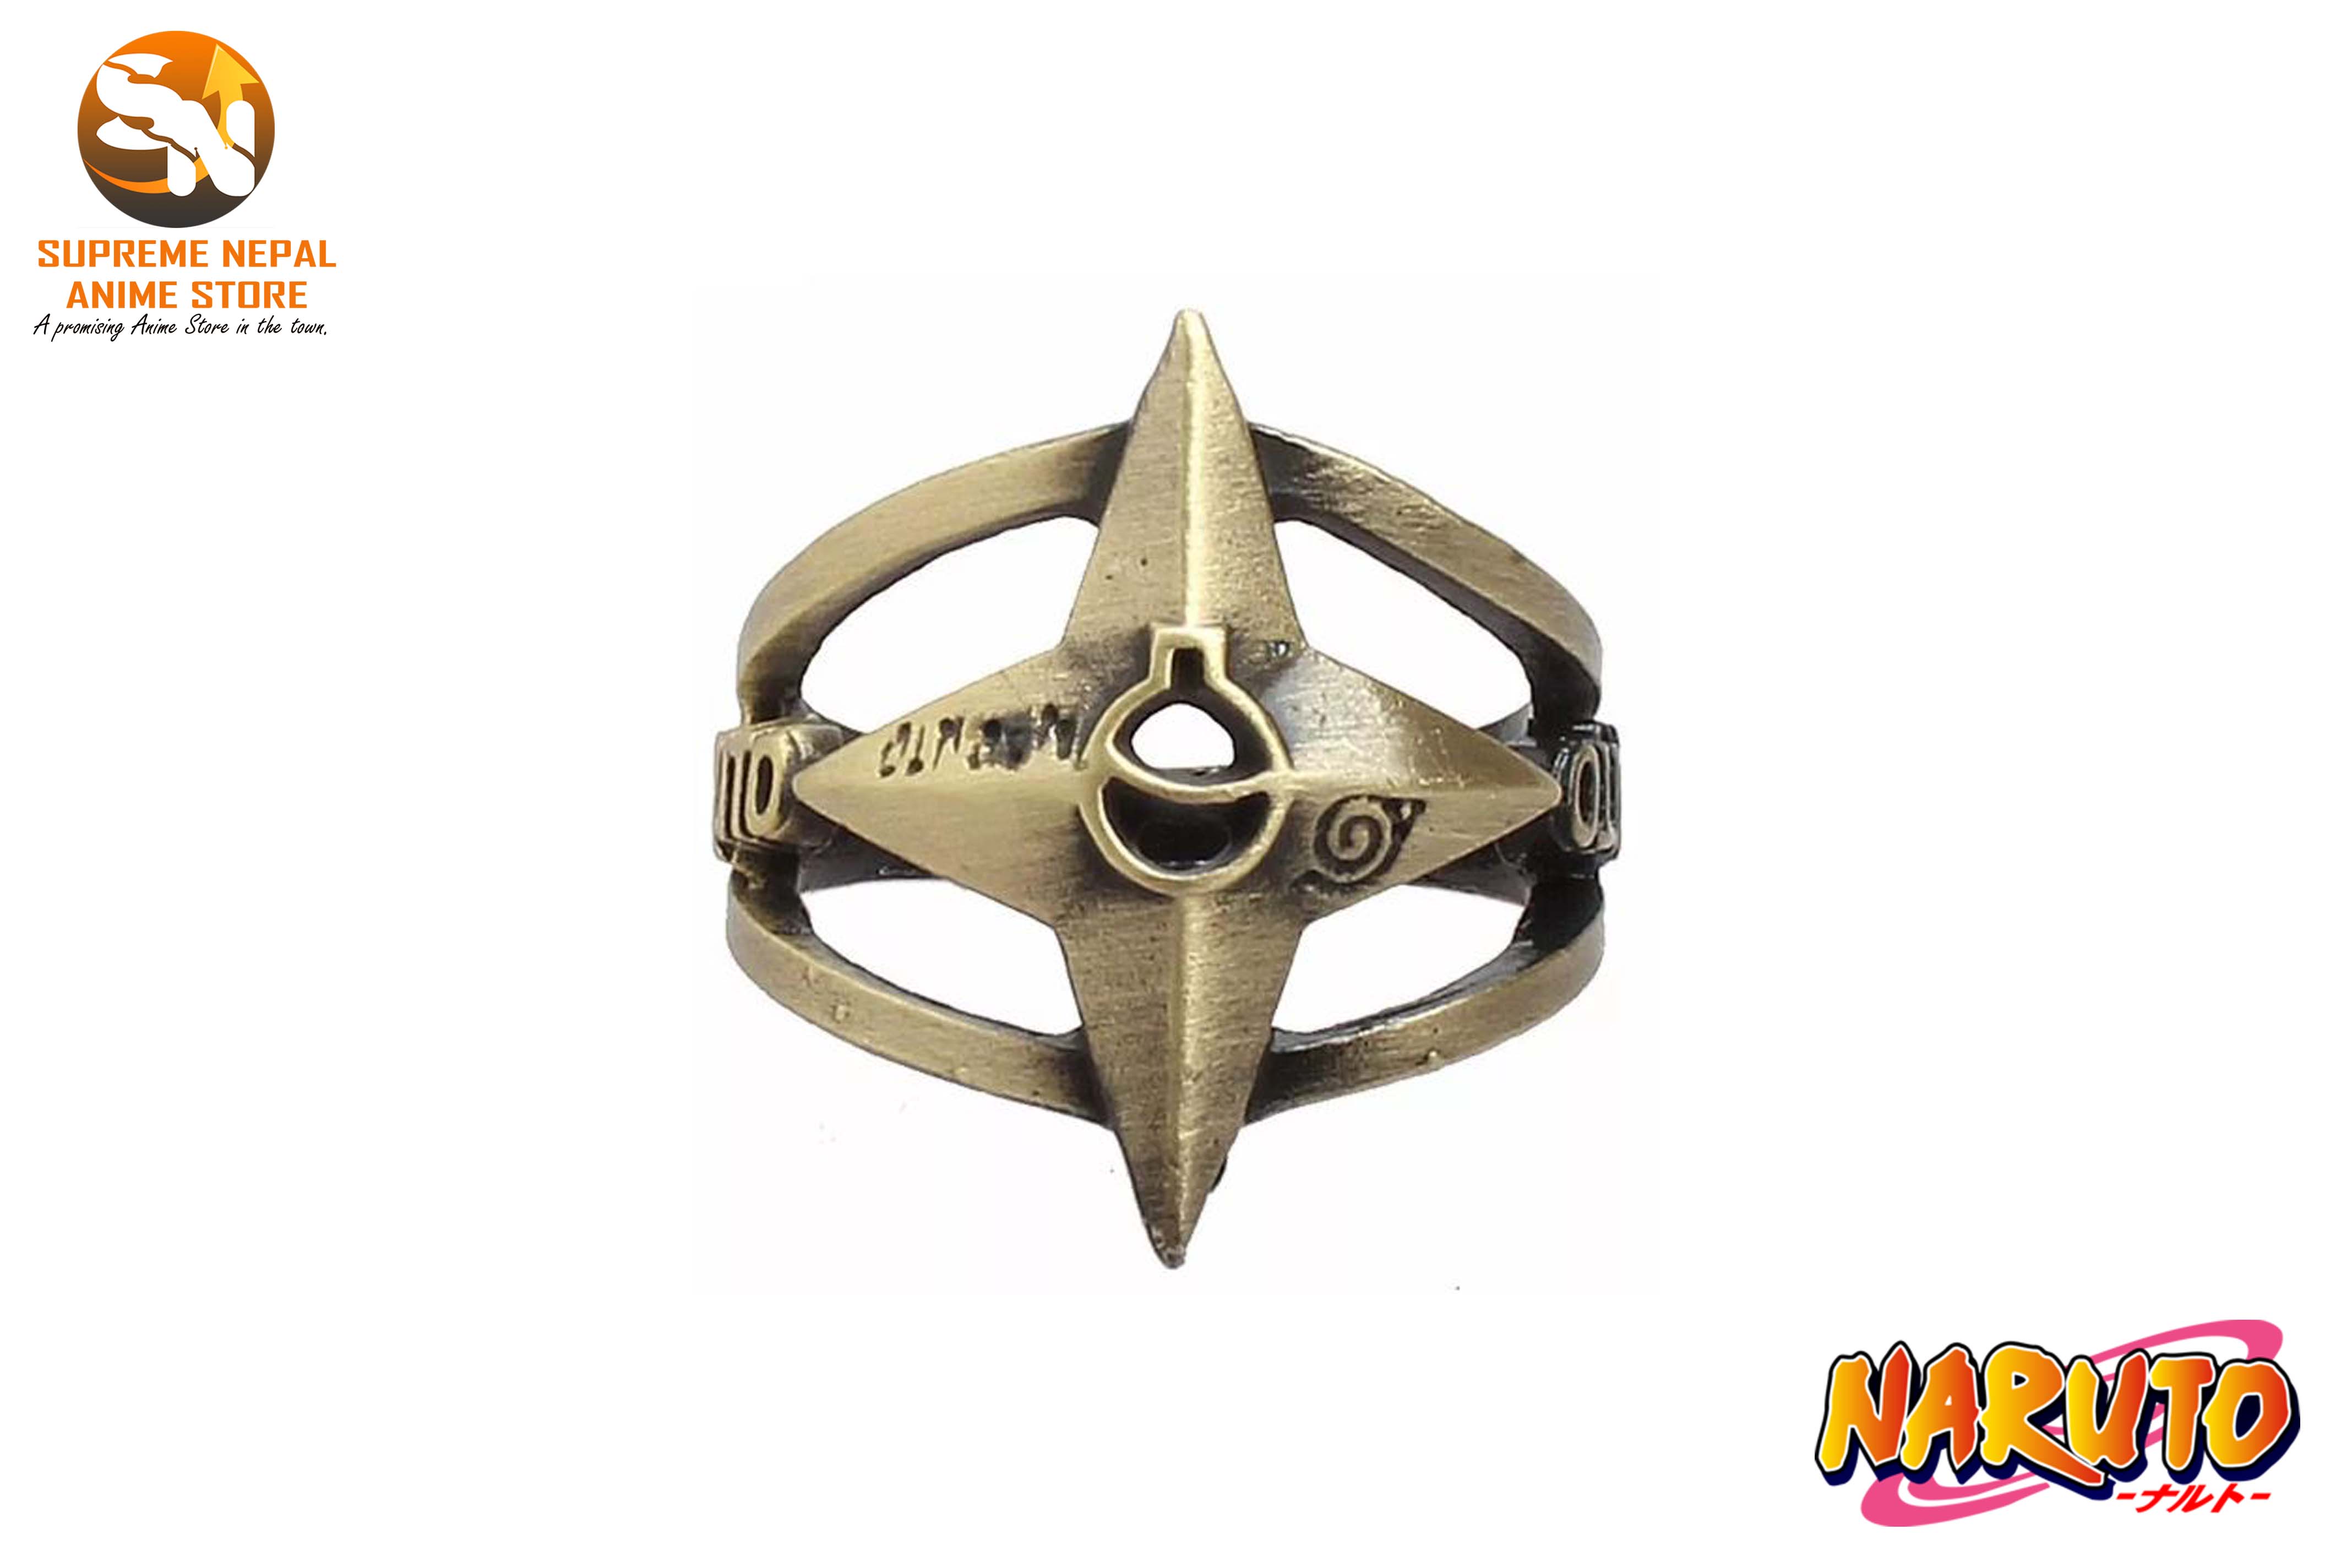 SN00600012 Naruto Ring - Kakegurui Merch